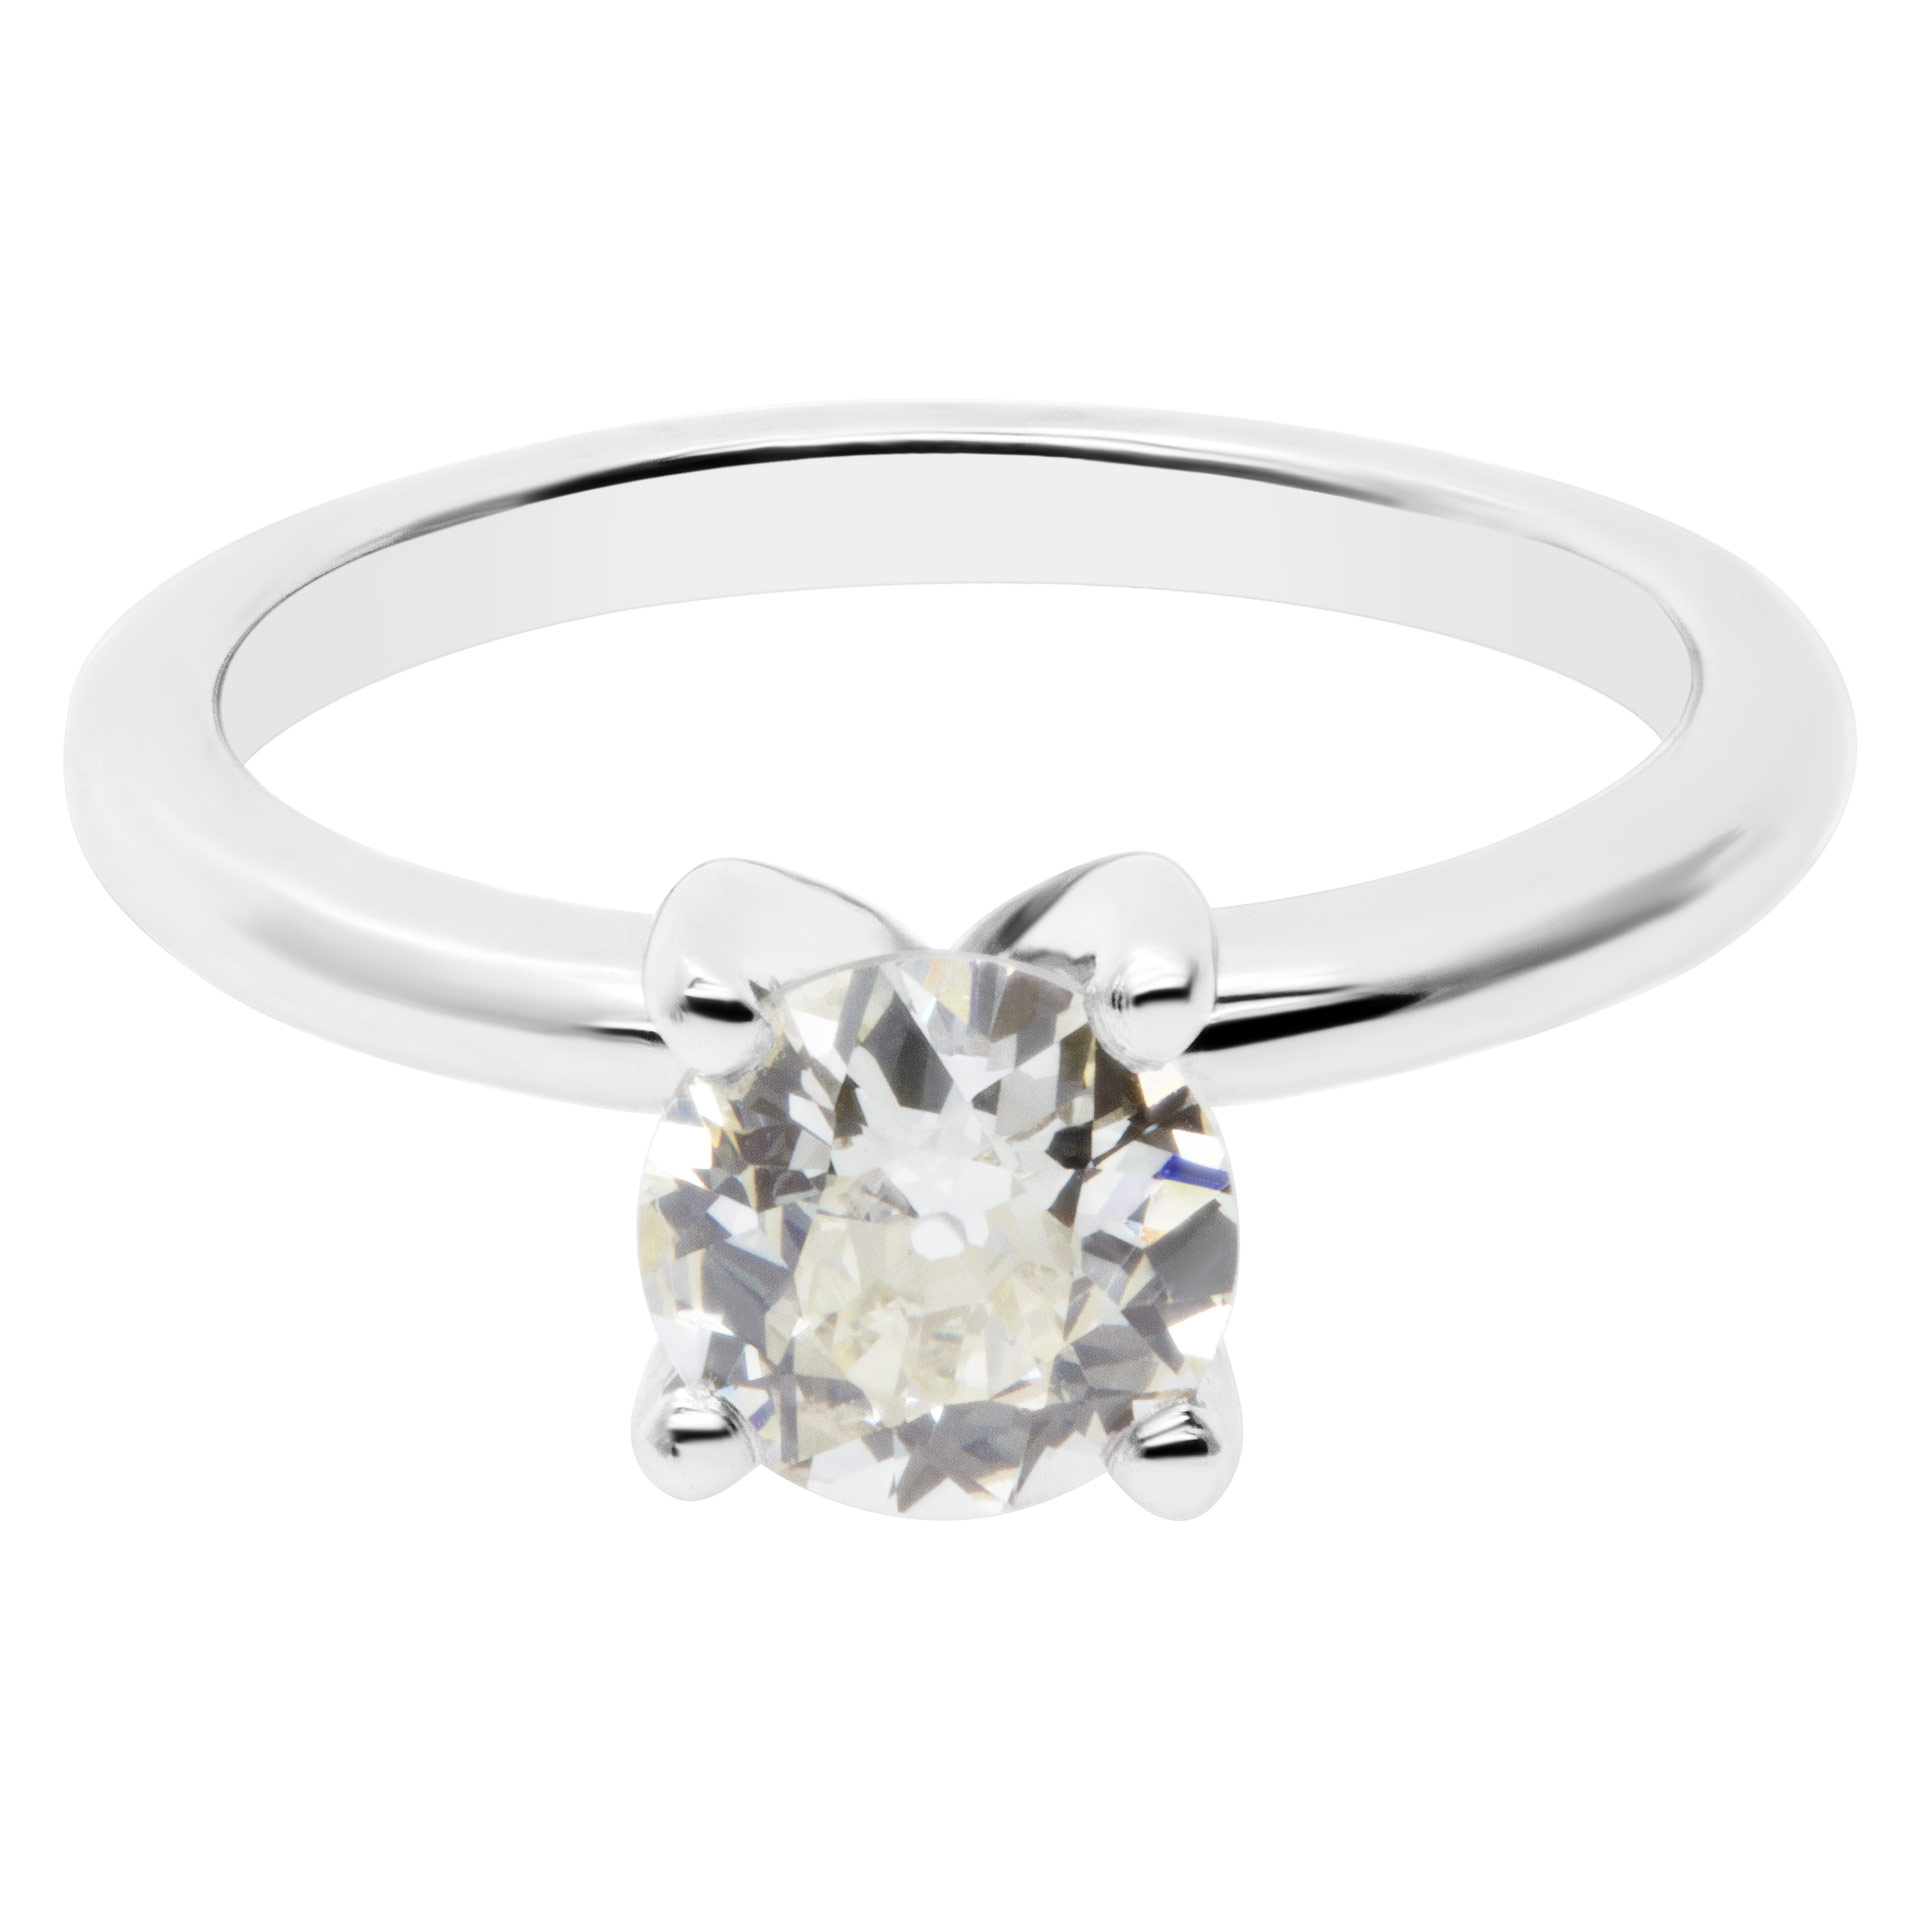 GIA certified old europeam brilliant cut diamond 1.09 carat (O to P range, VS1 clarity) solitaire ring set in platinum